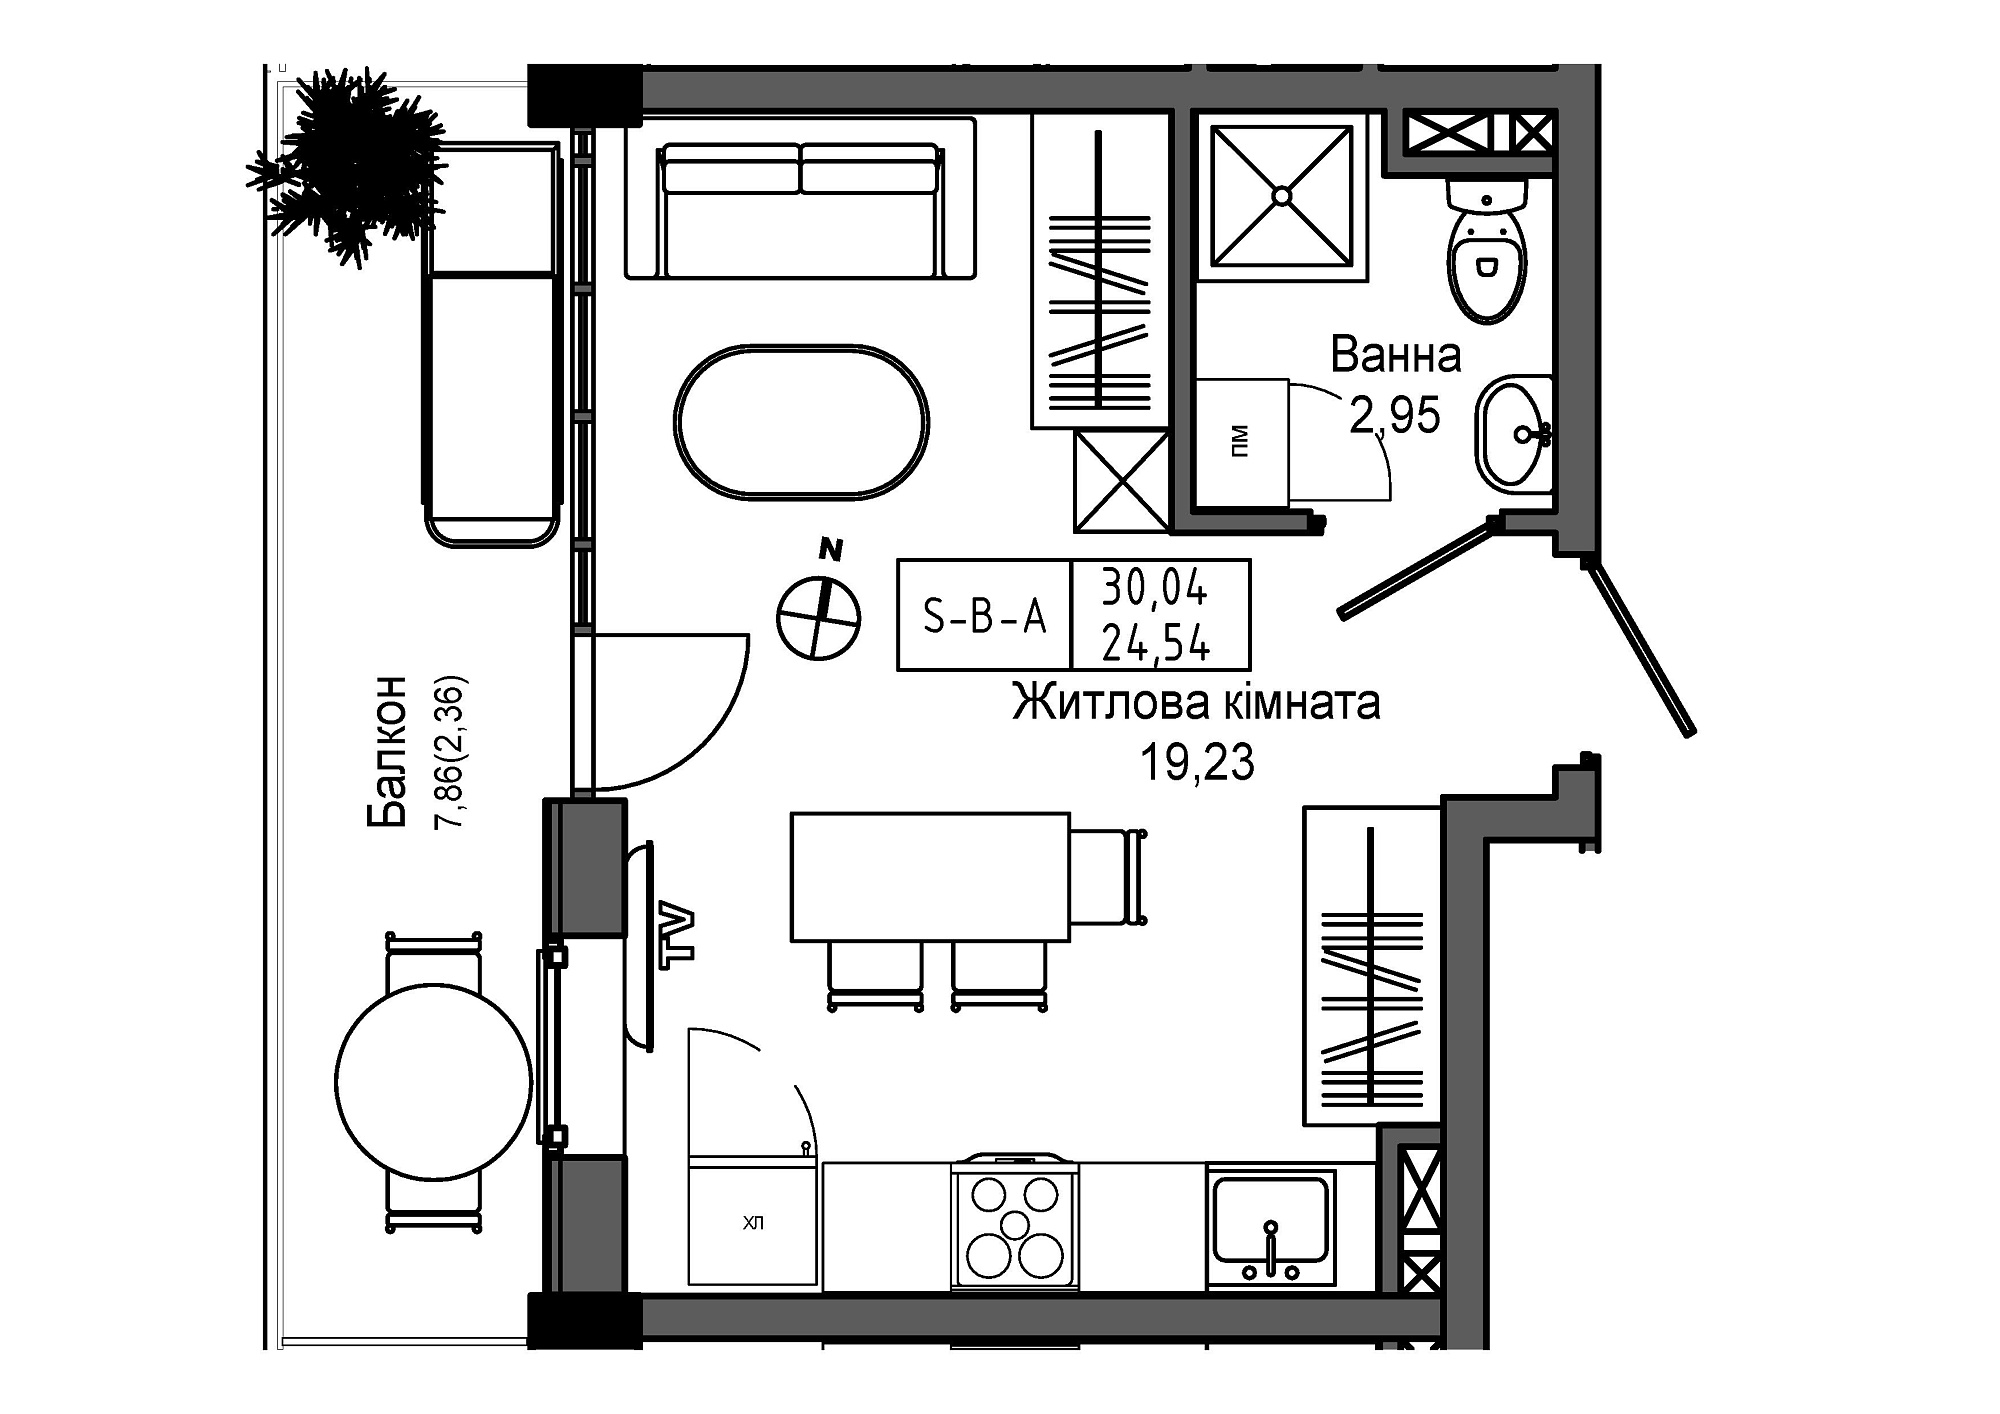 Planning Smart flats area 24.54m2, UM-006-05/0009.